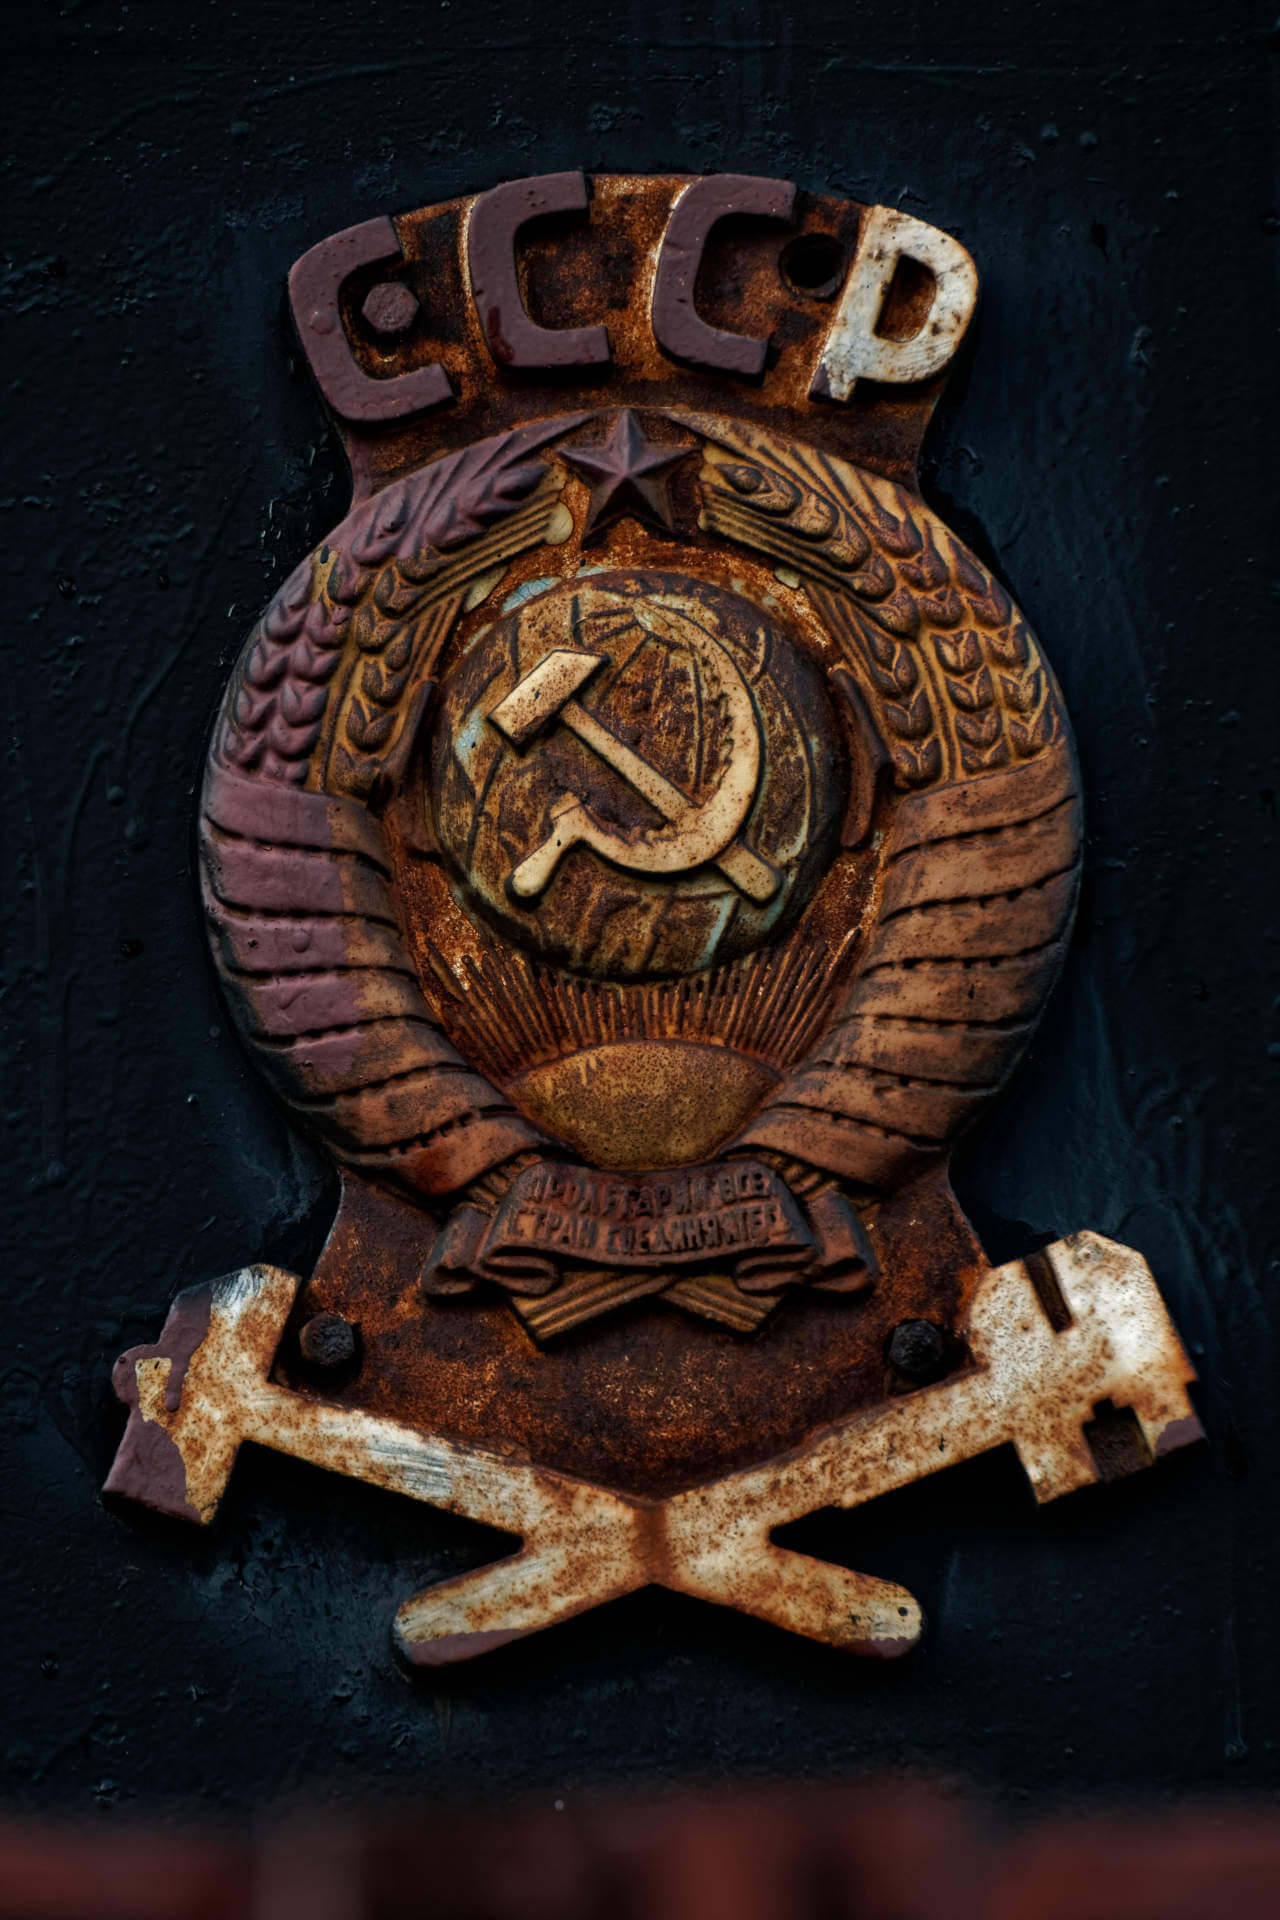 Герб СССР 